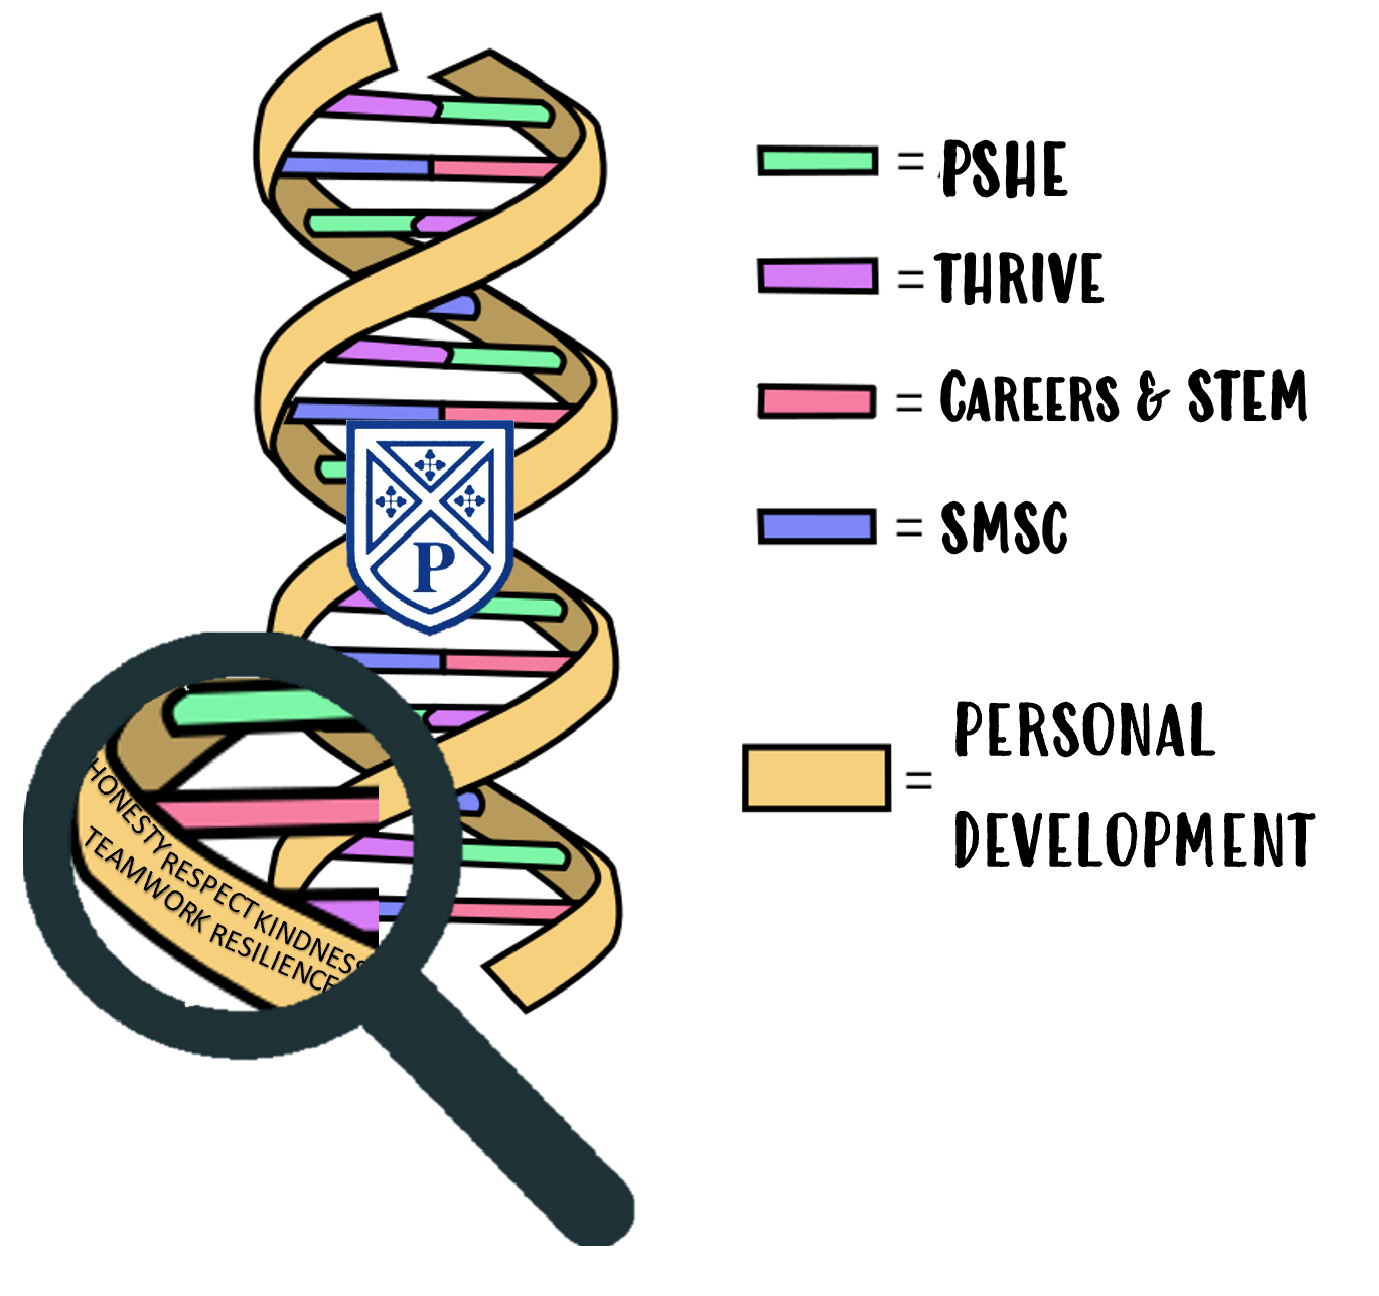 Personal Development DNA image